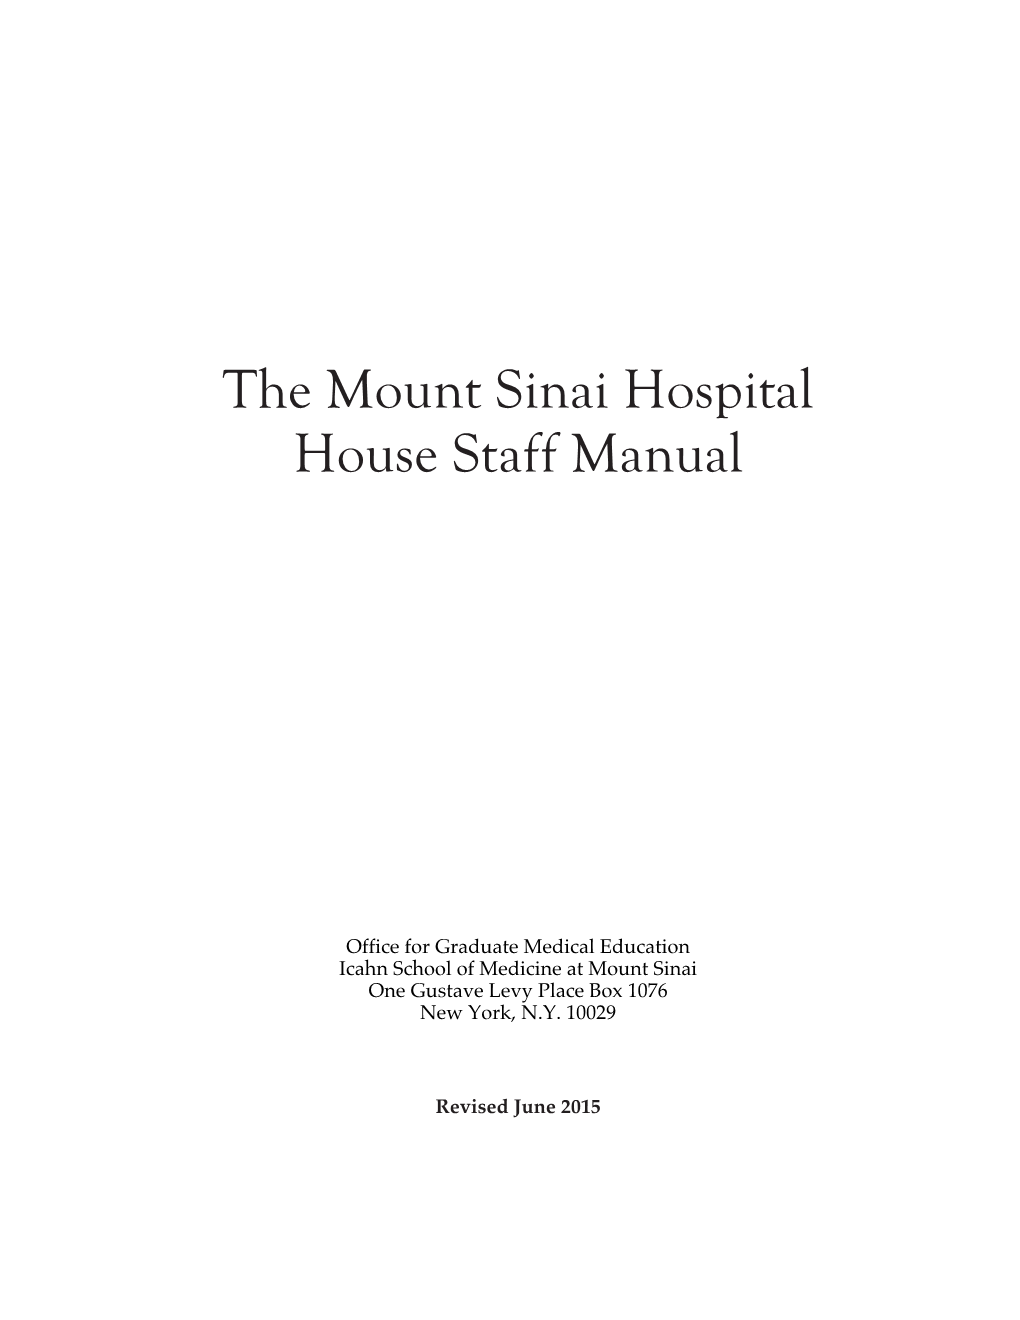 The Mount Sinai Hospital House Staff Manual